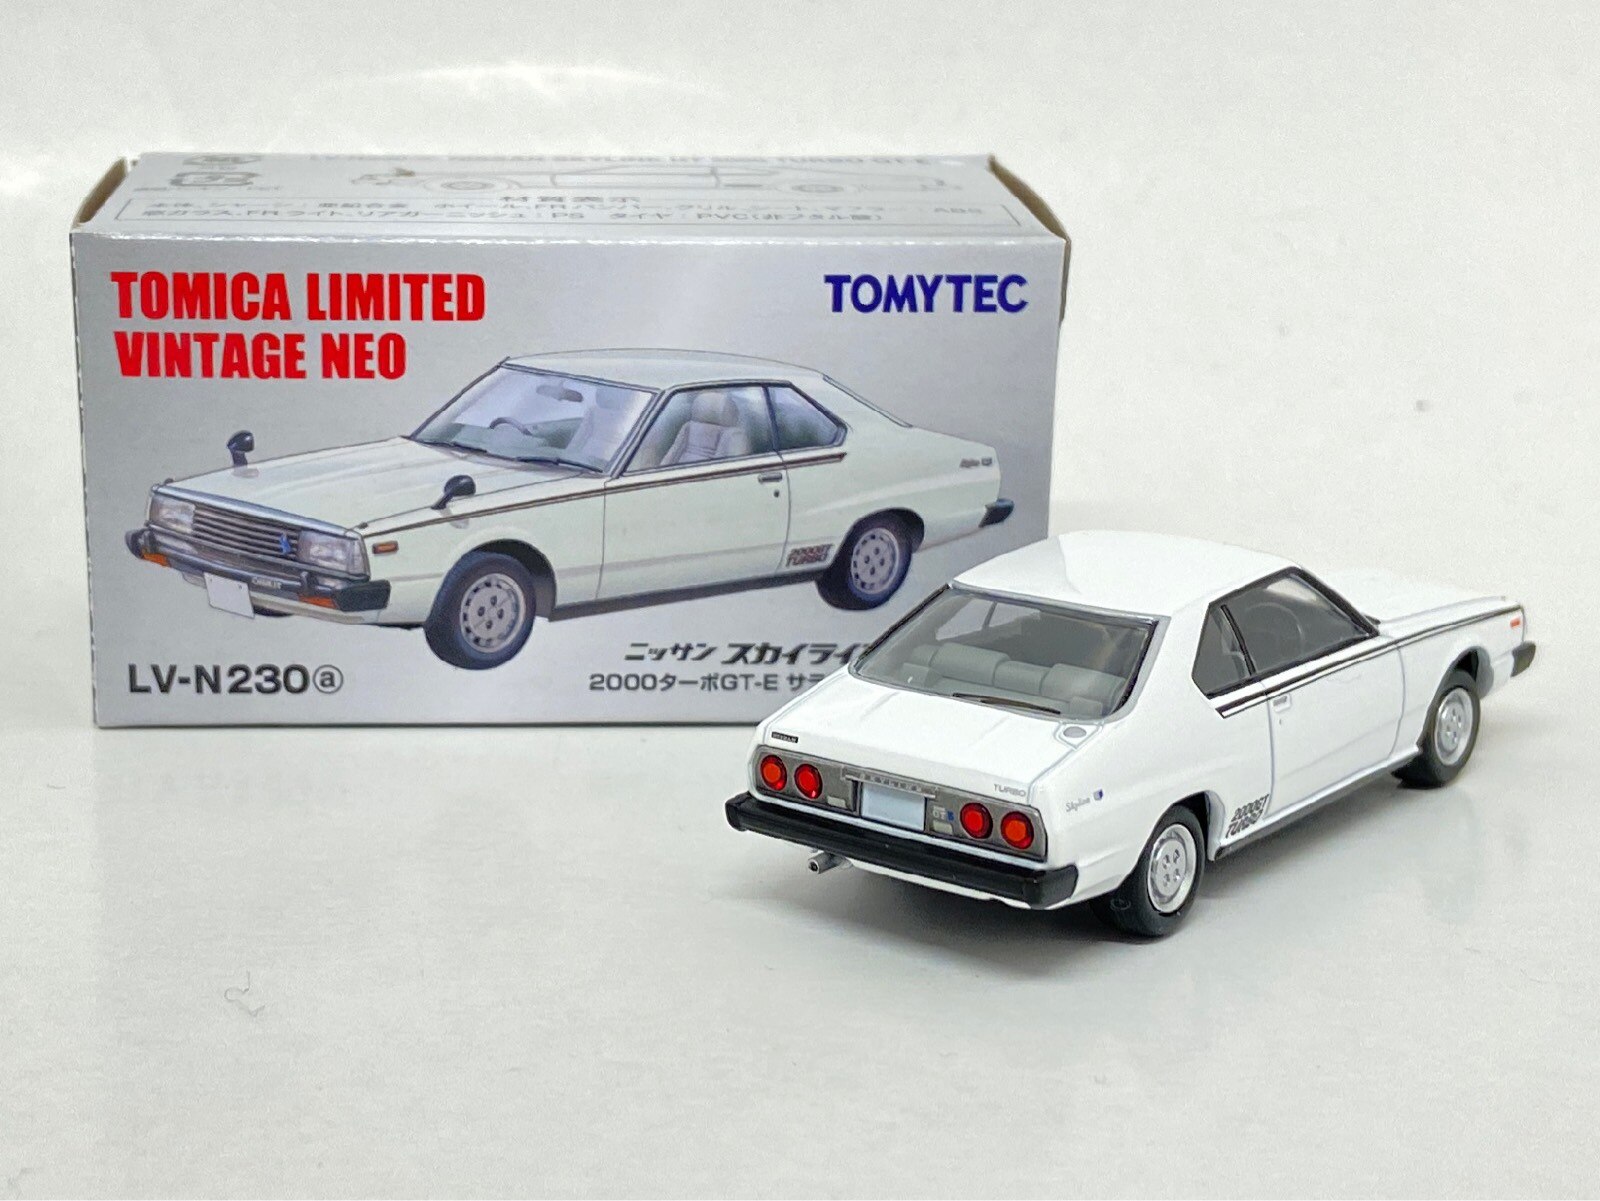 Tomica Limited Vintage NEO LV-N230a NISSAN SKYLINE HT 2000 TURBO GT-E 81 TOMYTEC 